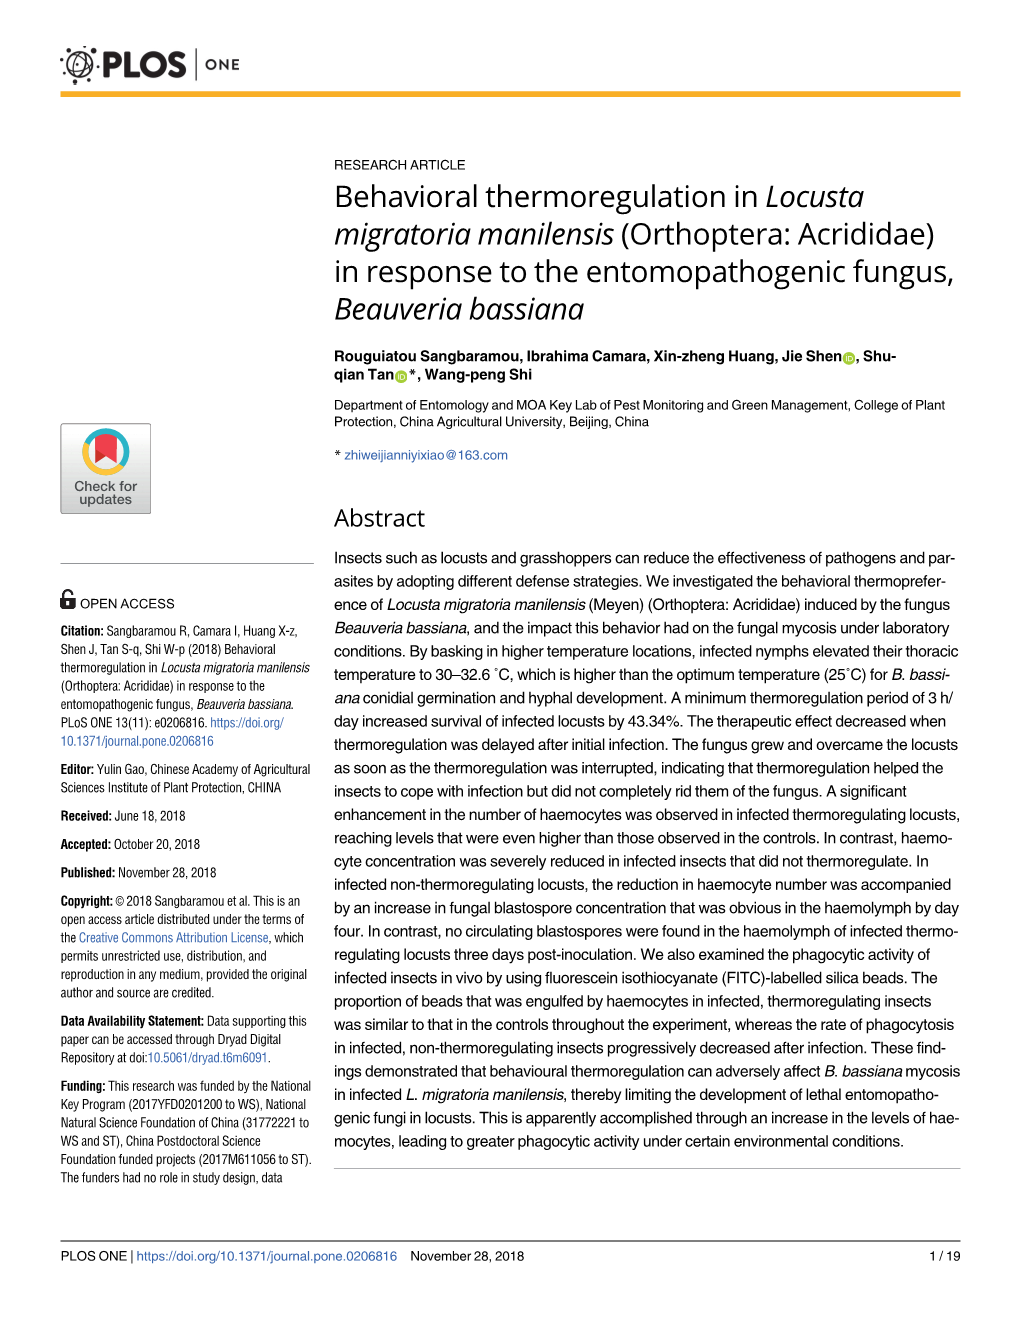 Behavioral Thermoregulation in Locusta Migratoria Manilensis (Orthoptera: Acrididae) in Response to the Entomopathogenic Fungus, Beauveria Bassiana